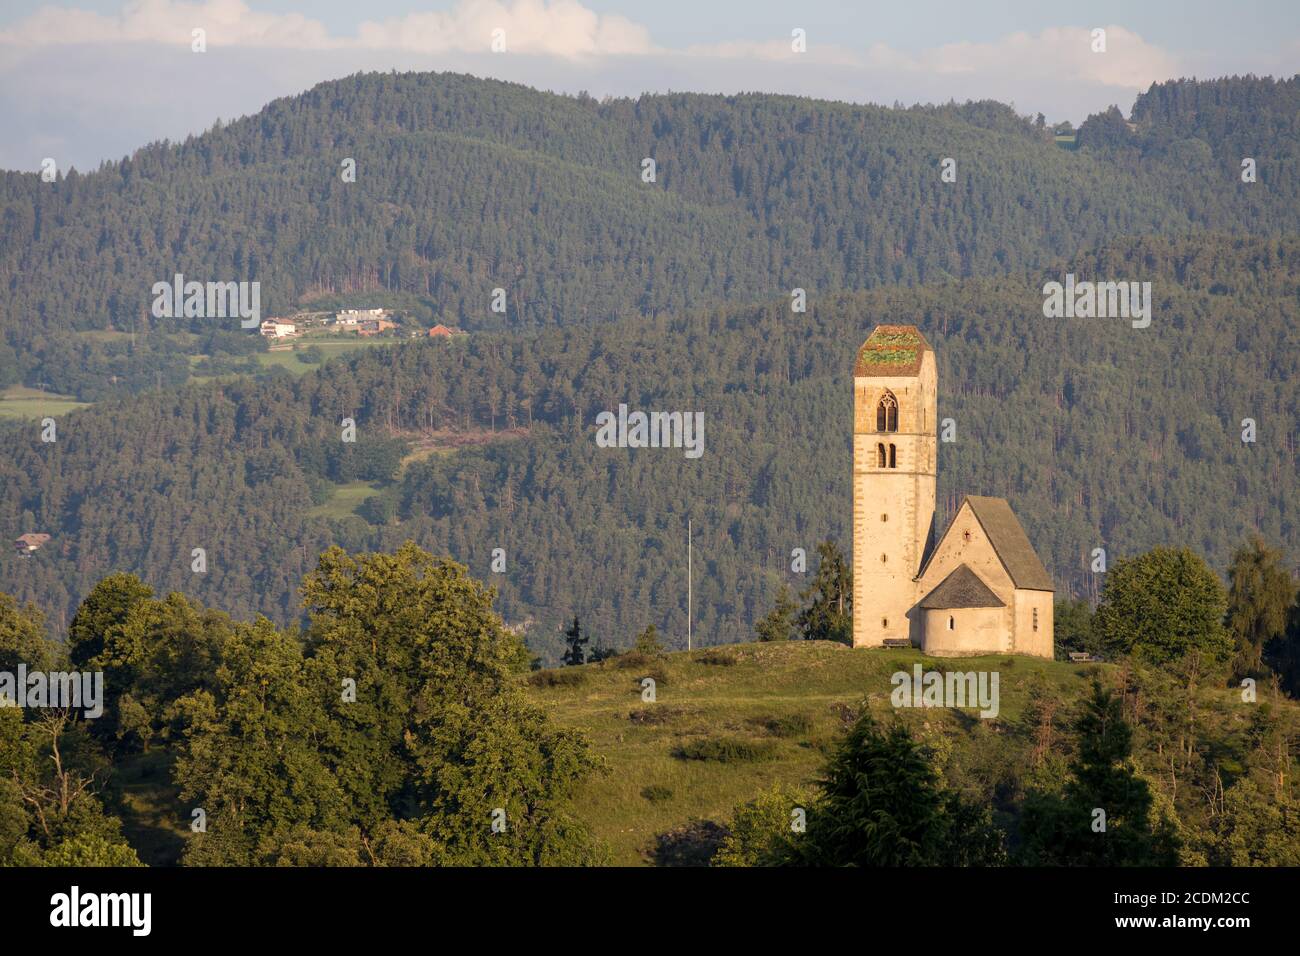 FIE ALLO SCILIAR, SOUTH TYROL/ITALY - AUGUST 8 : View of San Pietro In Colle church, Fie allo Sciliar Trentino Alto Adigio, South Tyrol, Italy on August 8, 2020 Stock Photo